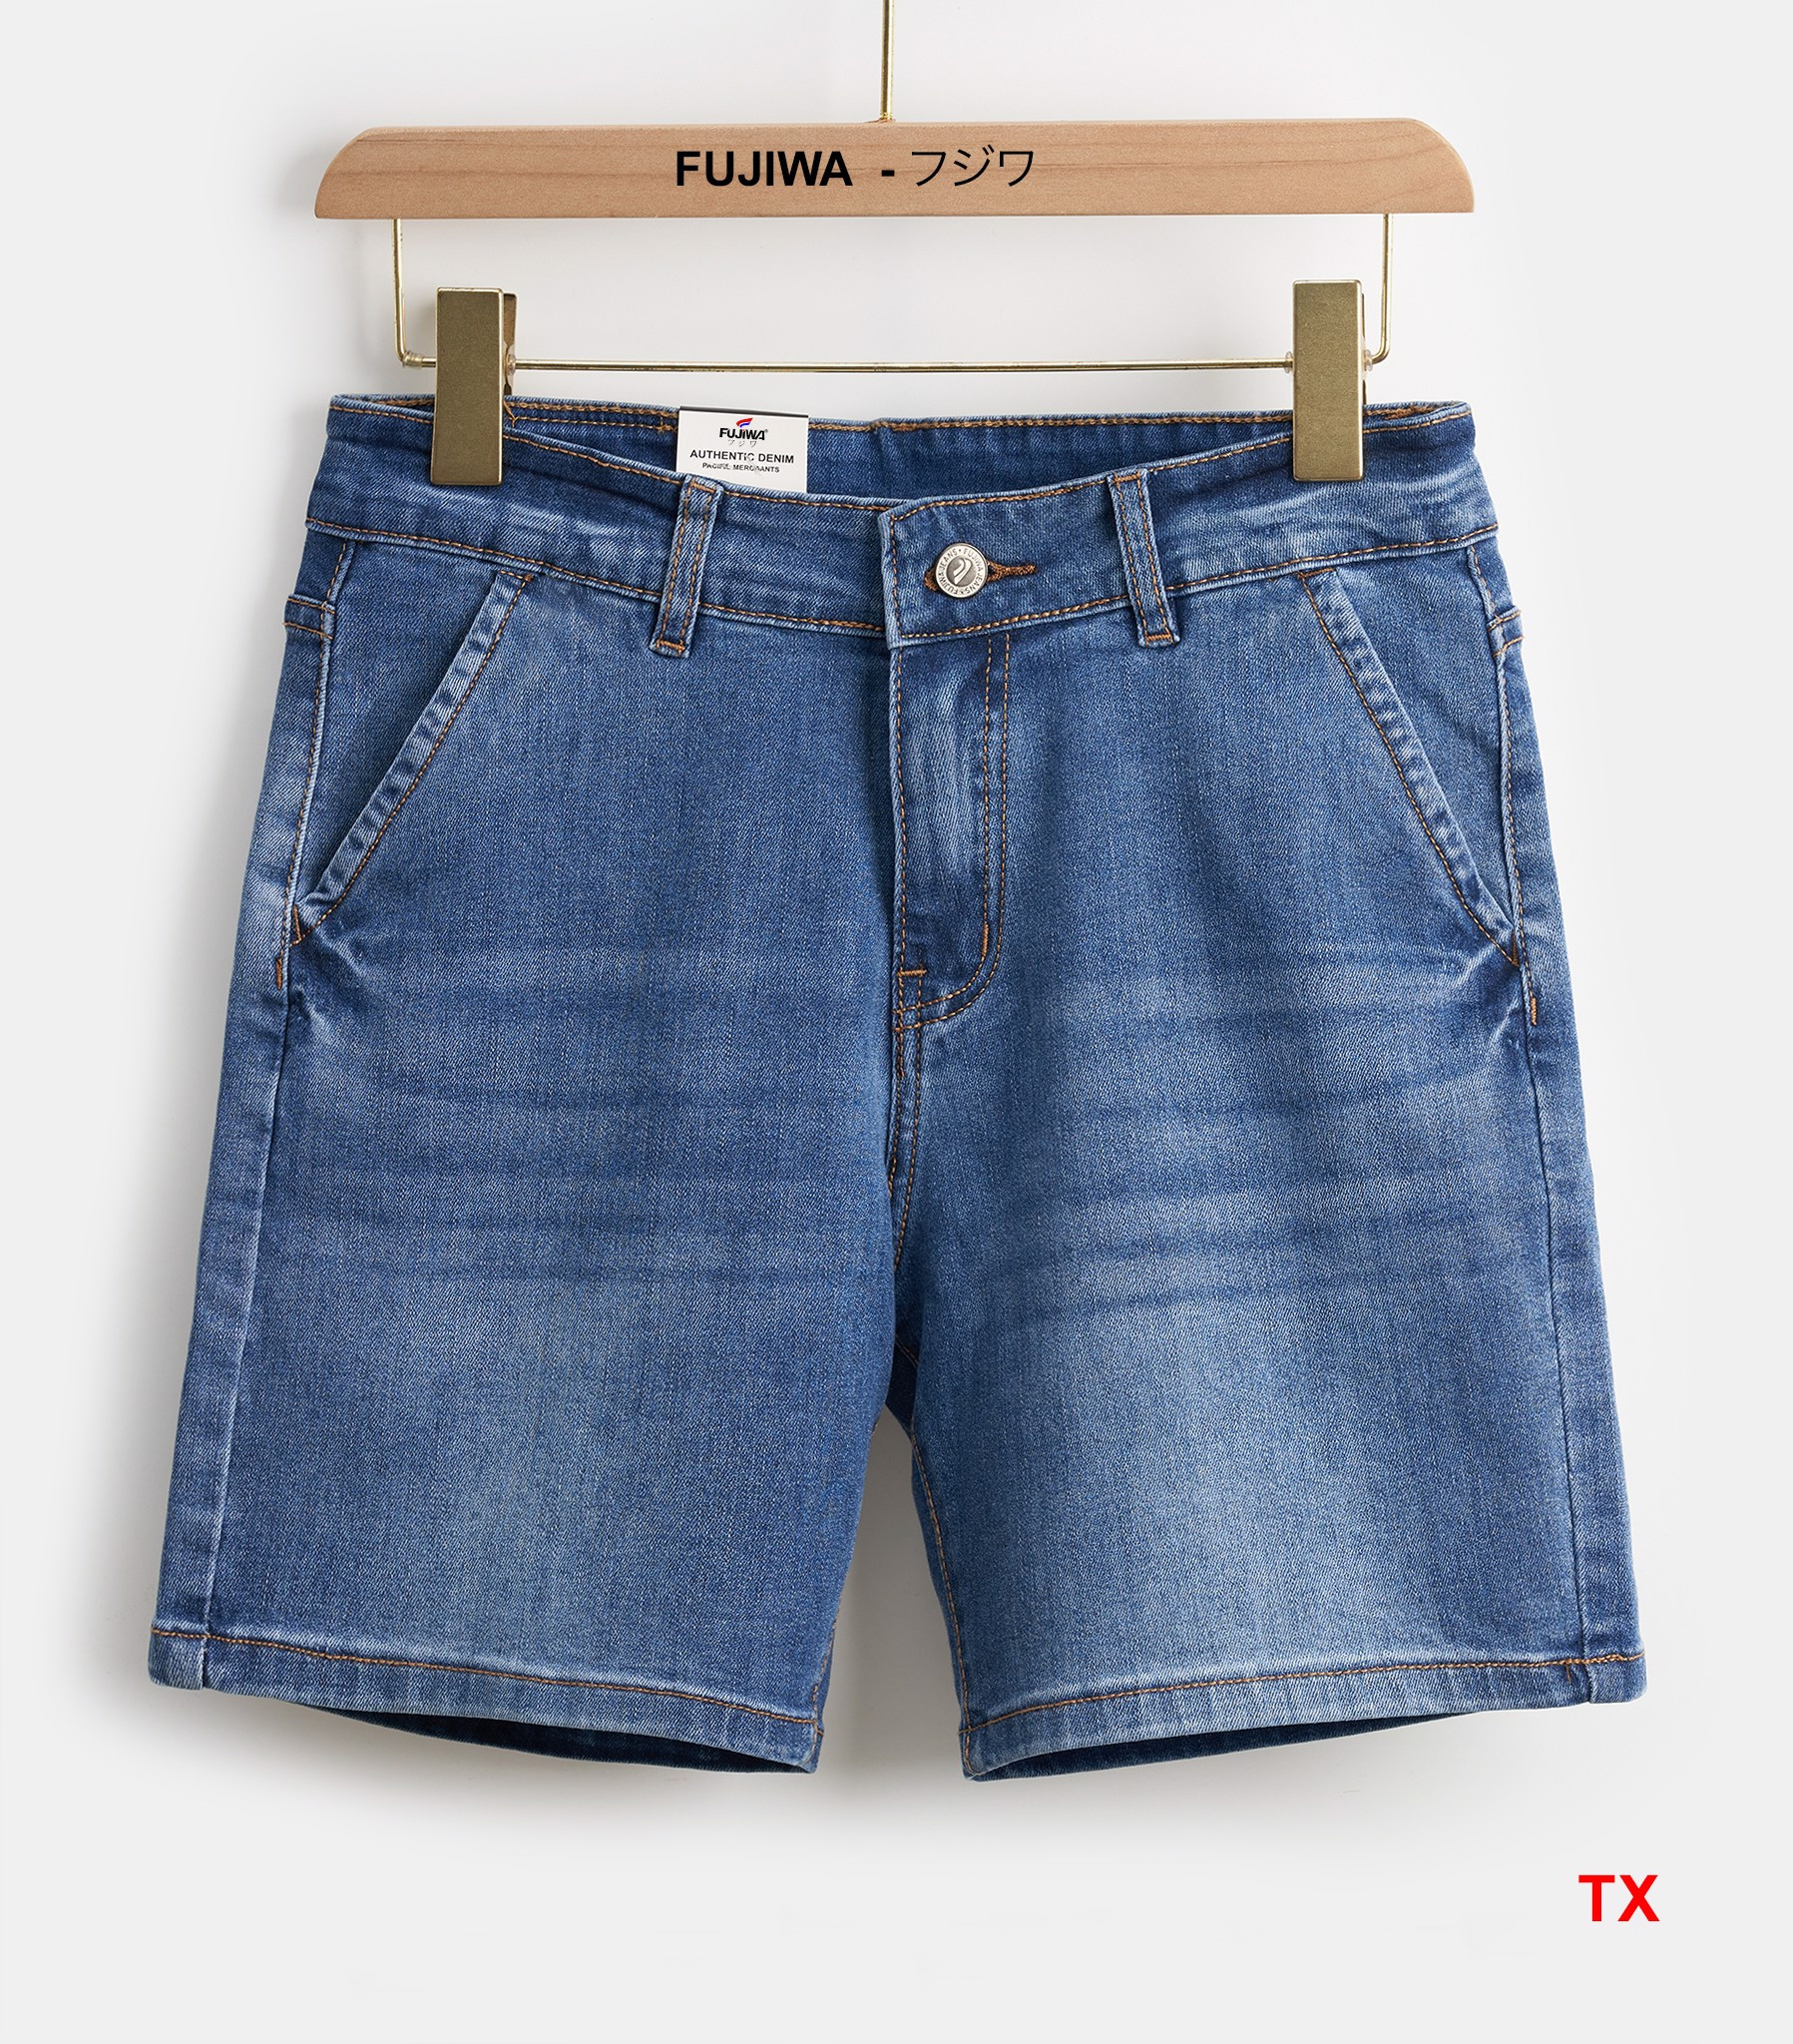 Fujiwa-TX women s Slant pocket jeans shorts. High waist exposed to the